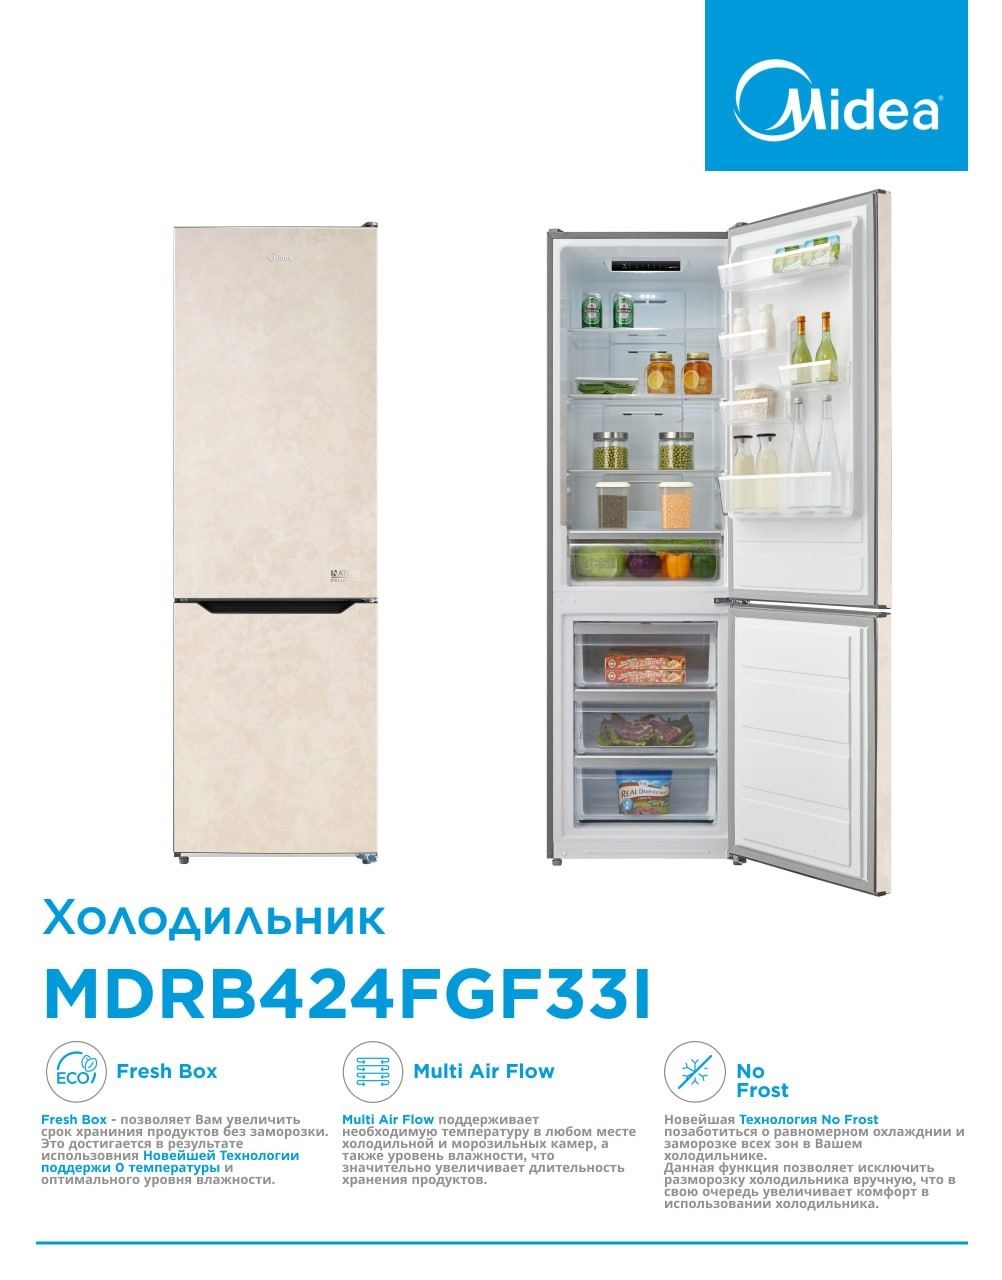 Холодилник из Midea